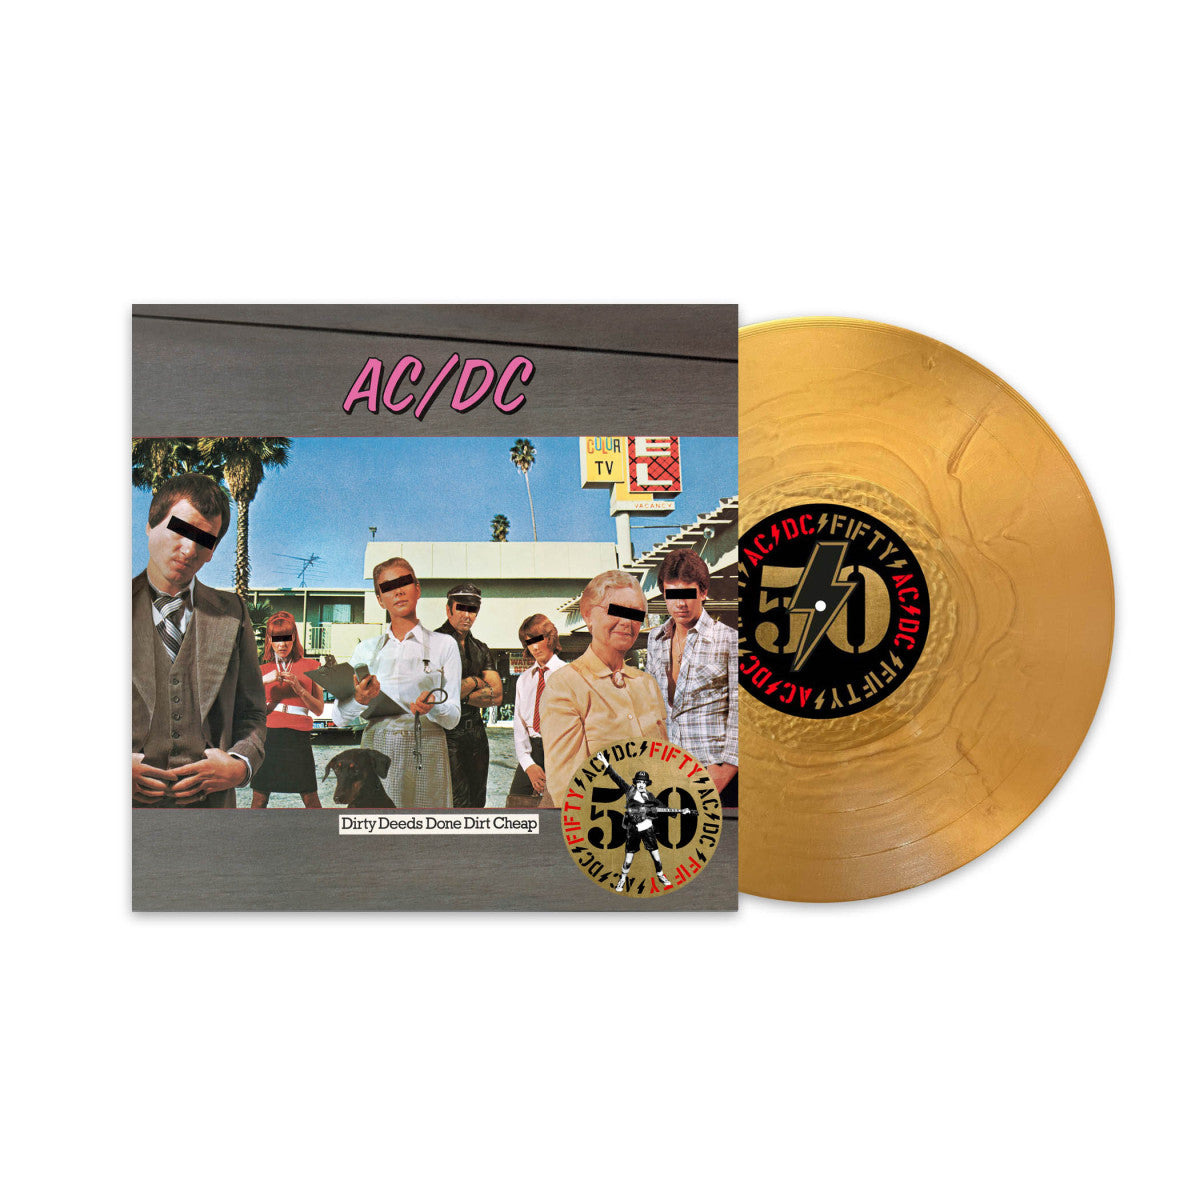 AC/DC "Dirty Deeds Done Dirt Cheap" Gold Vinyl - PRE-ORDER